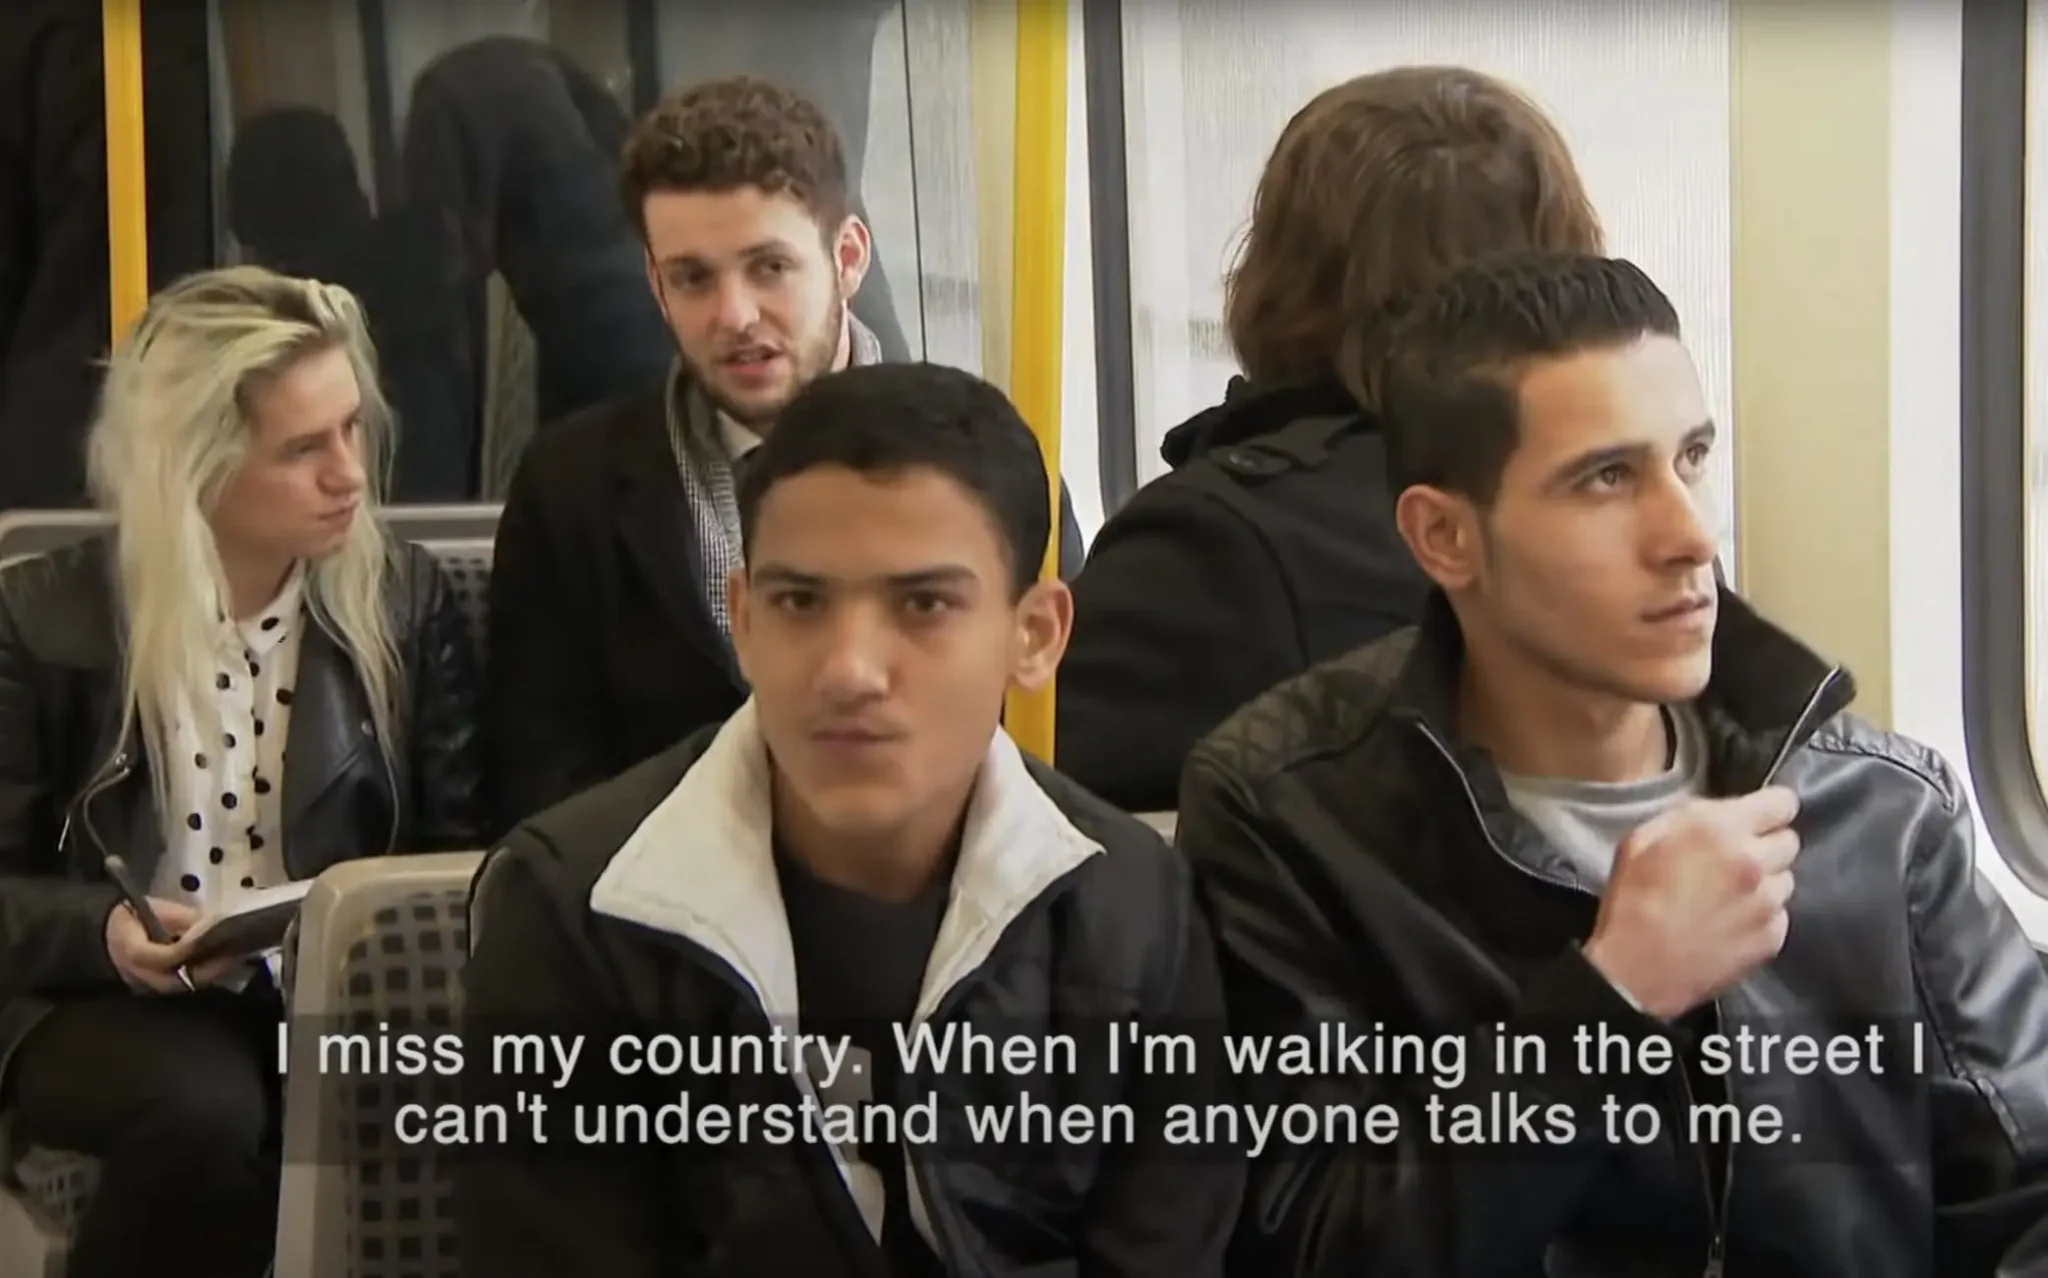 Dos hermanos sirios llegados a Reino Unido como refugiados, condenados por violar a una niña